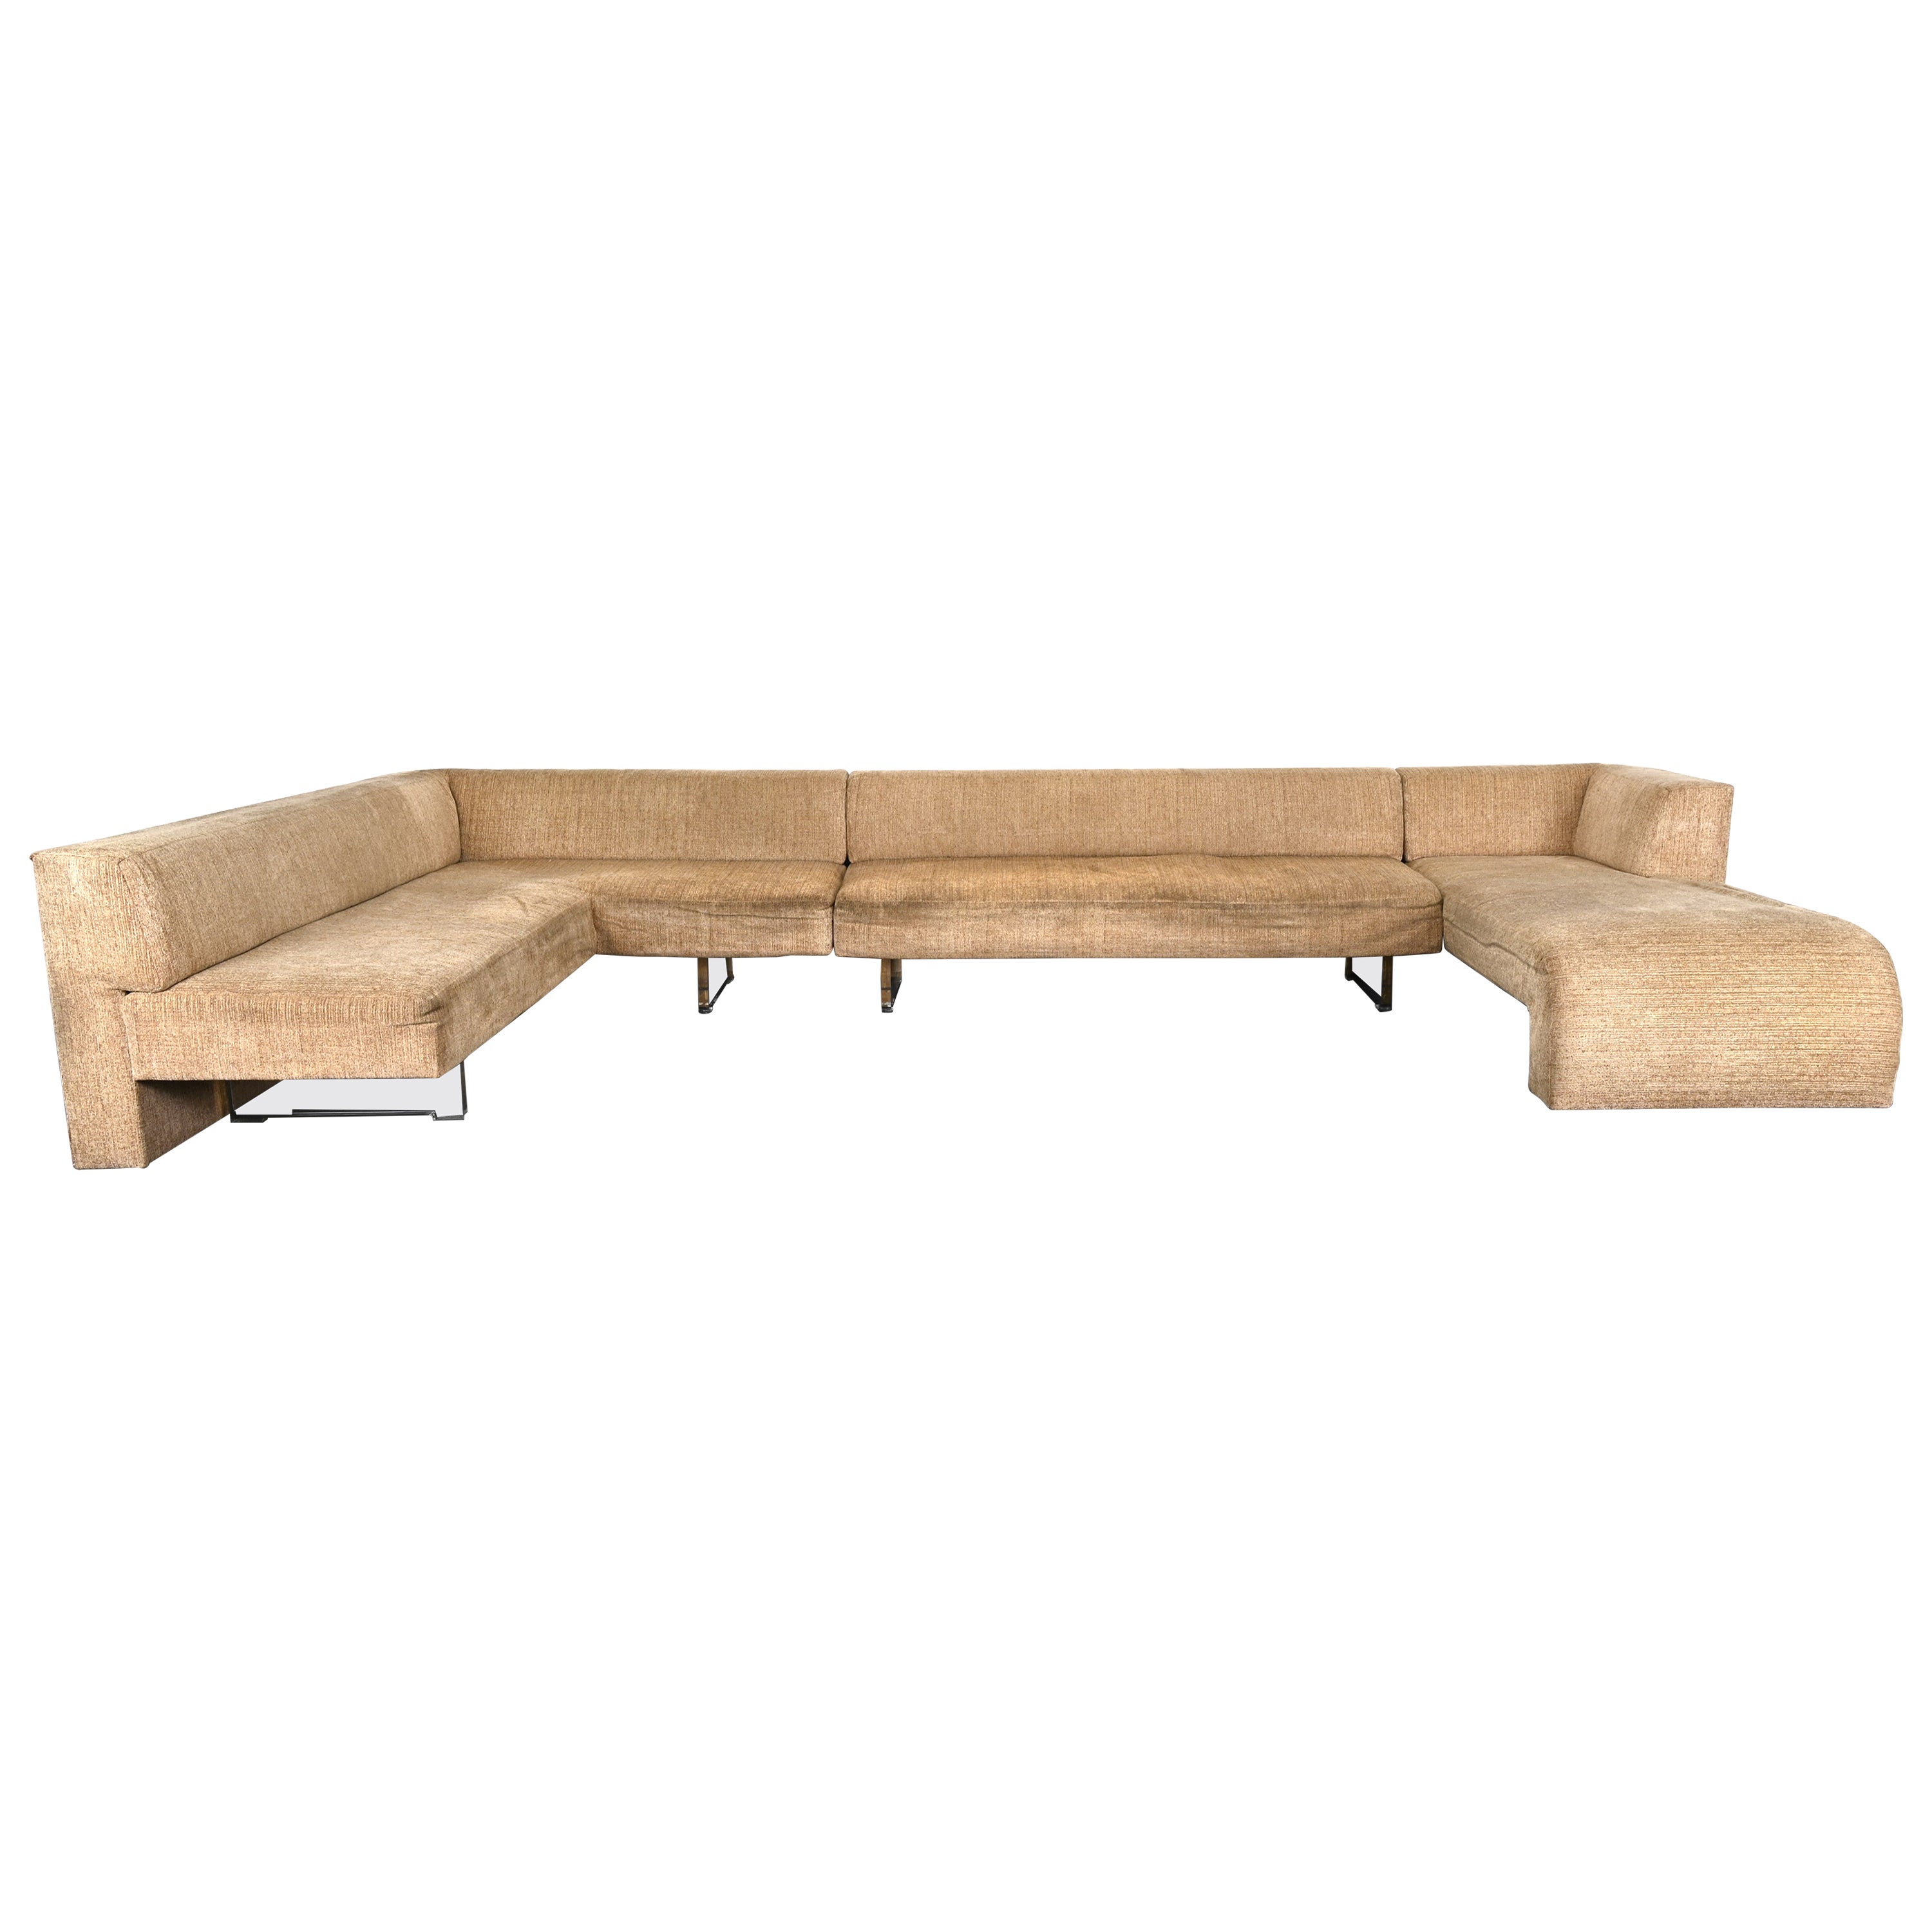 Monumental Sectional Sofa Designed by Vladimir Kagan, 1970s